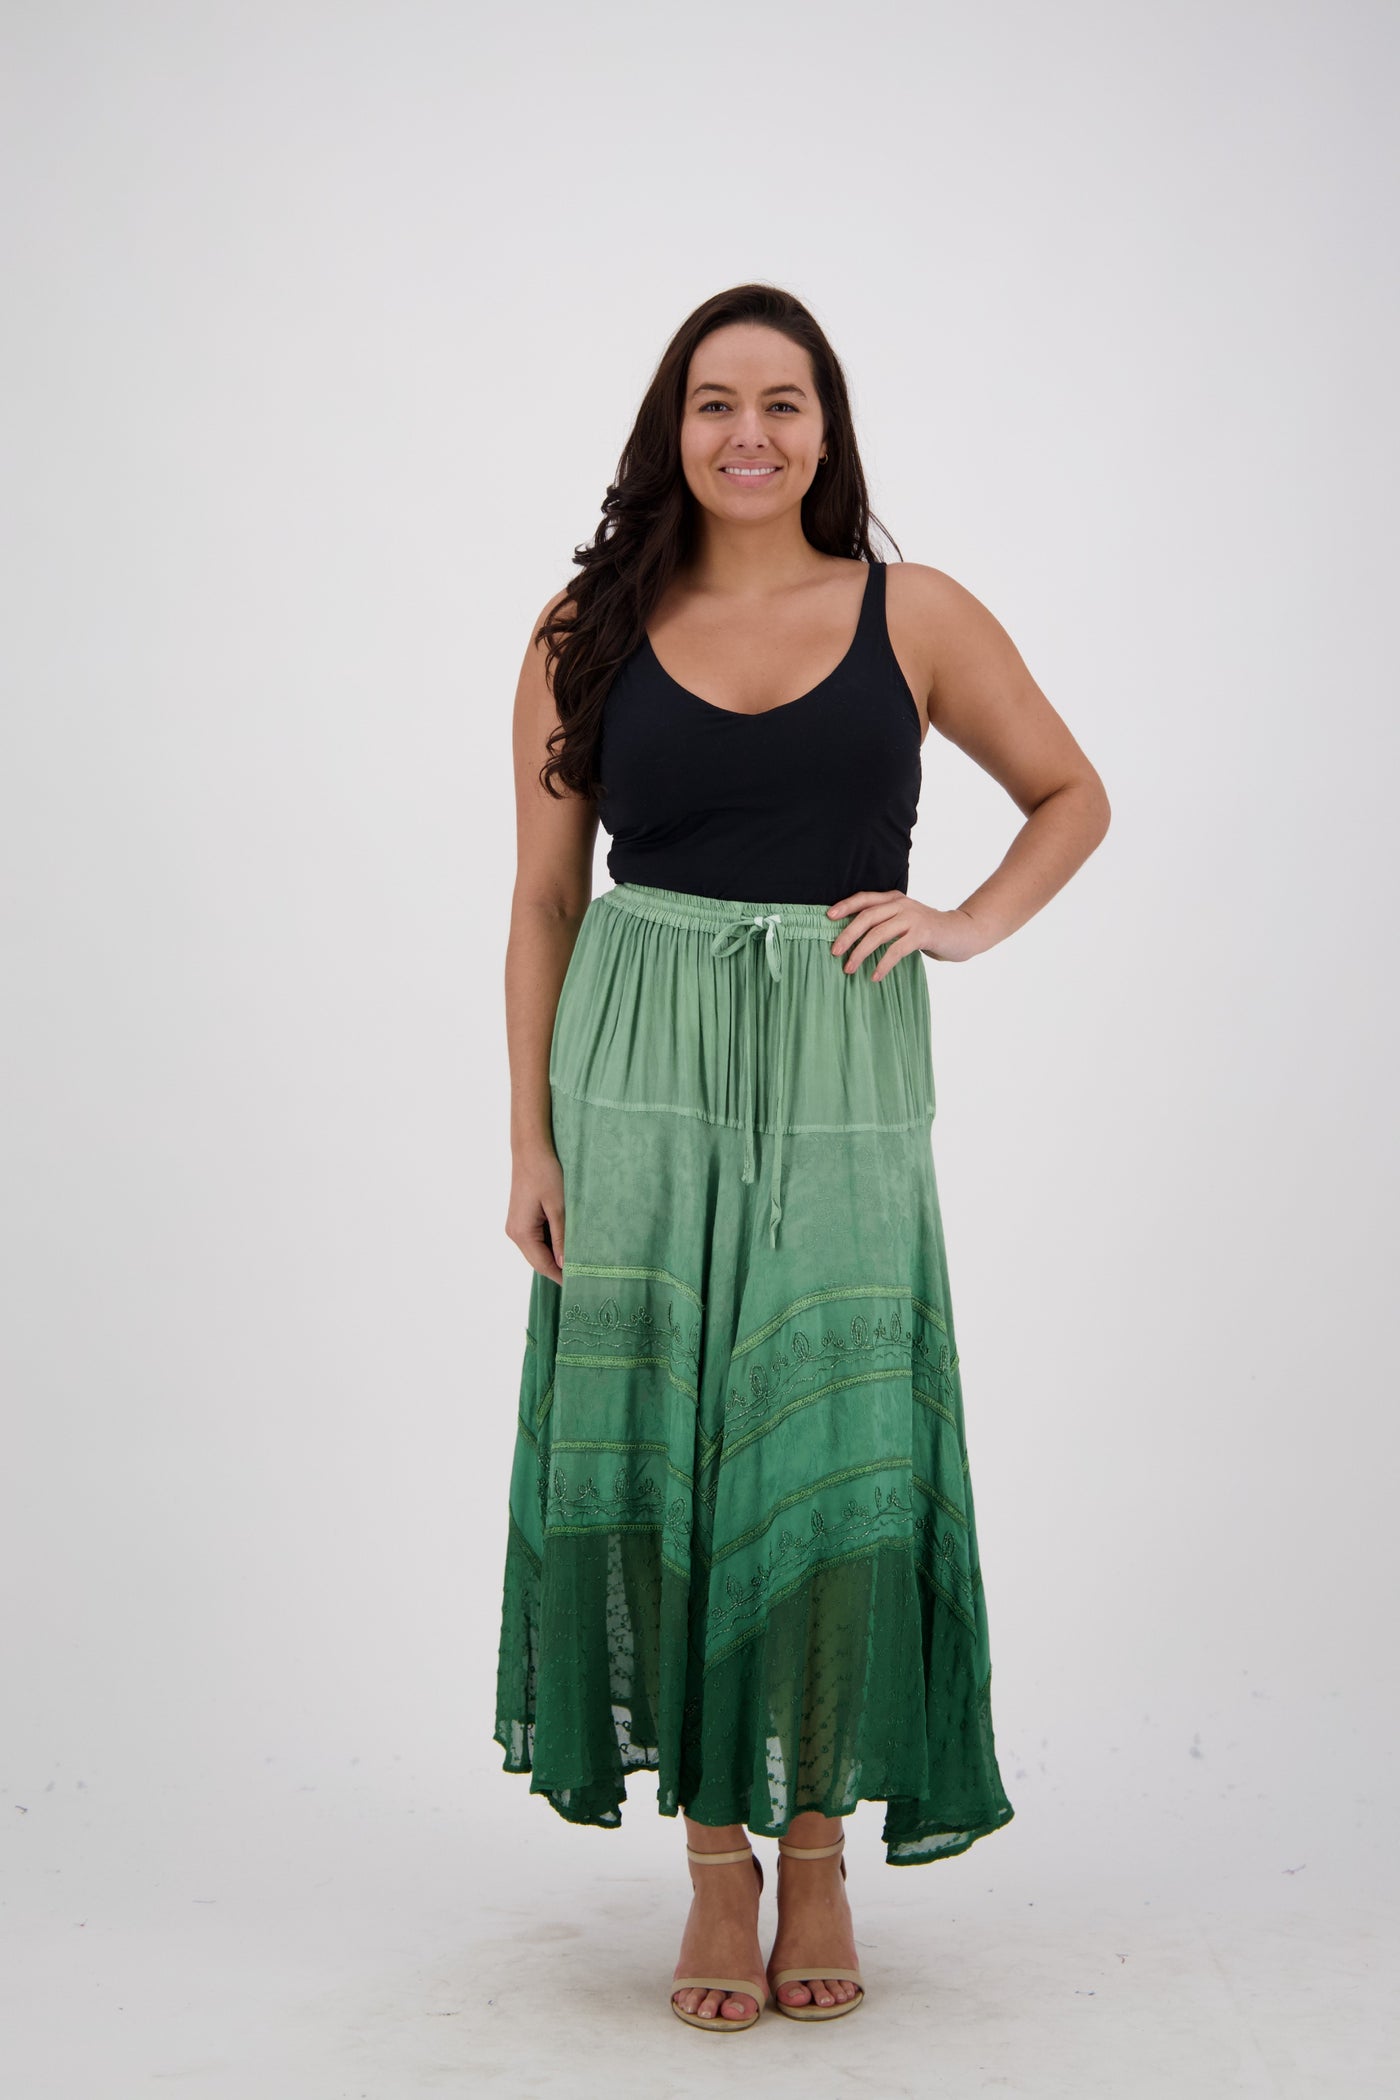 Ombre Dye Renaissance Skirt 13229